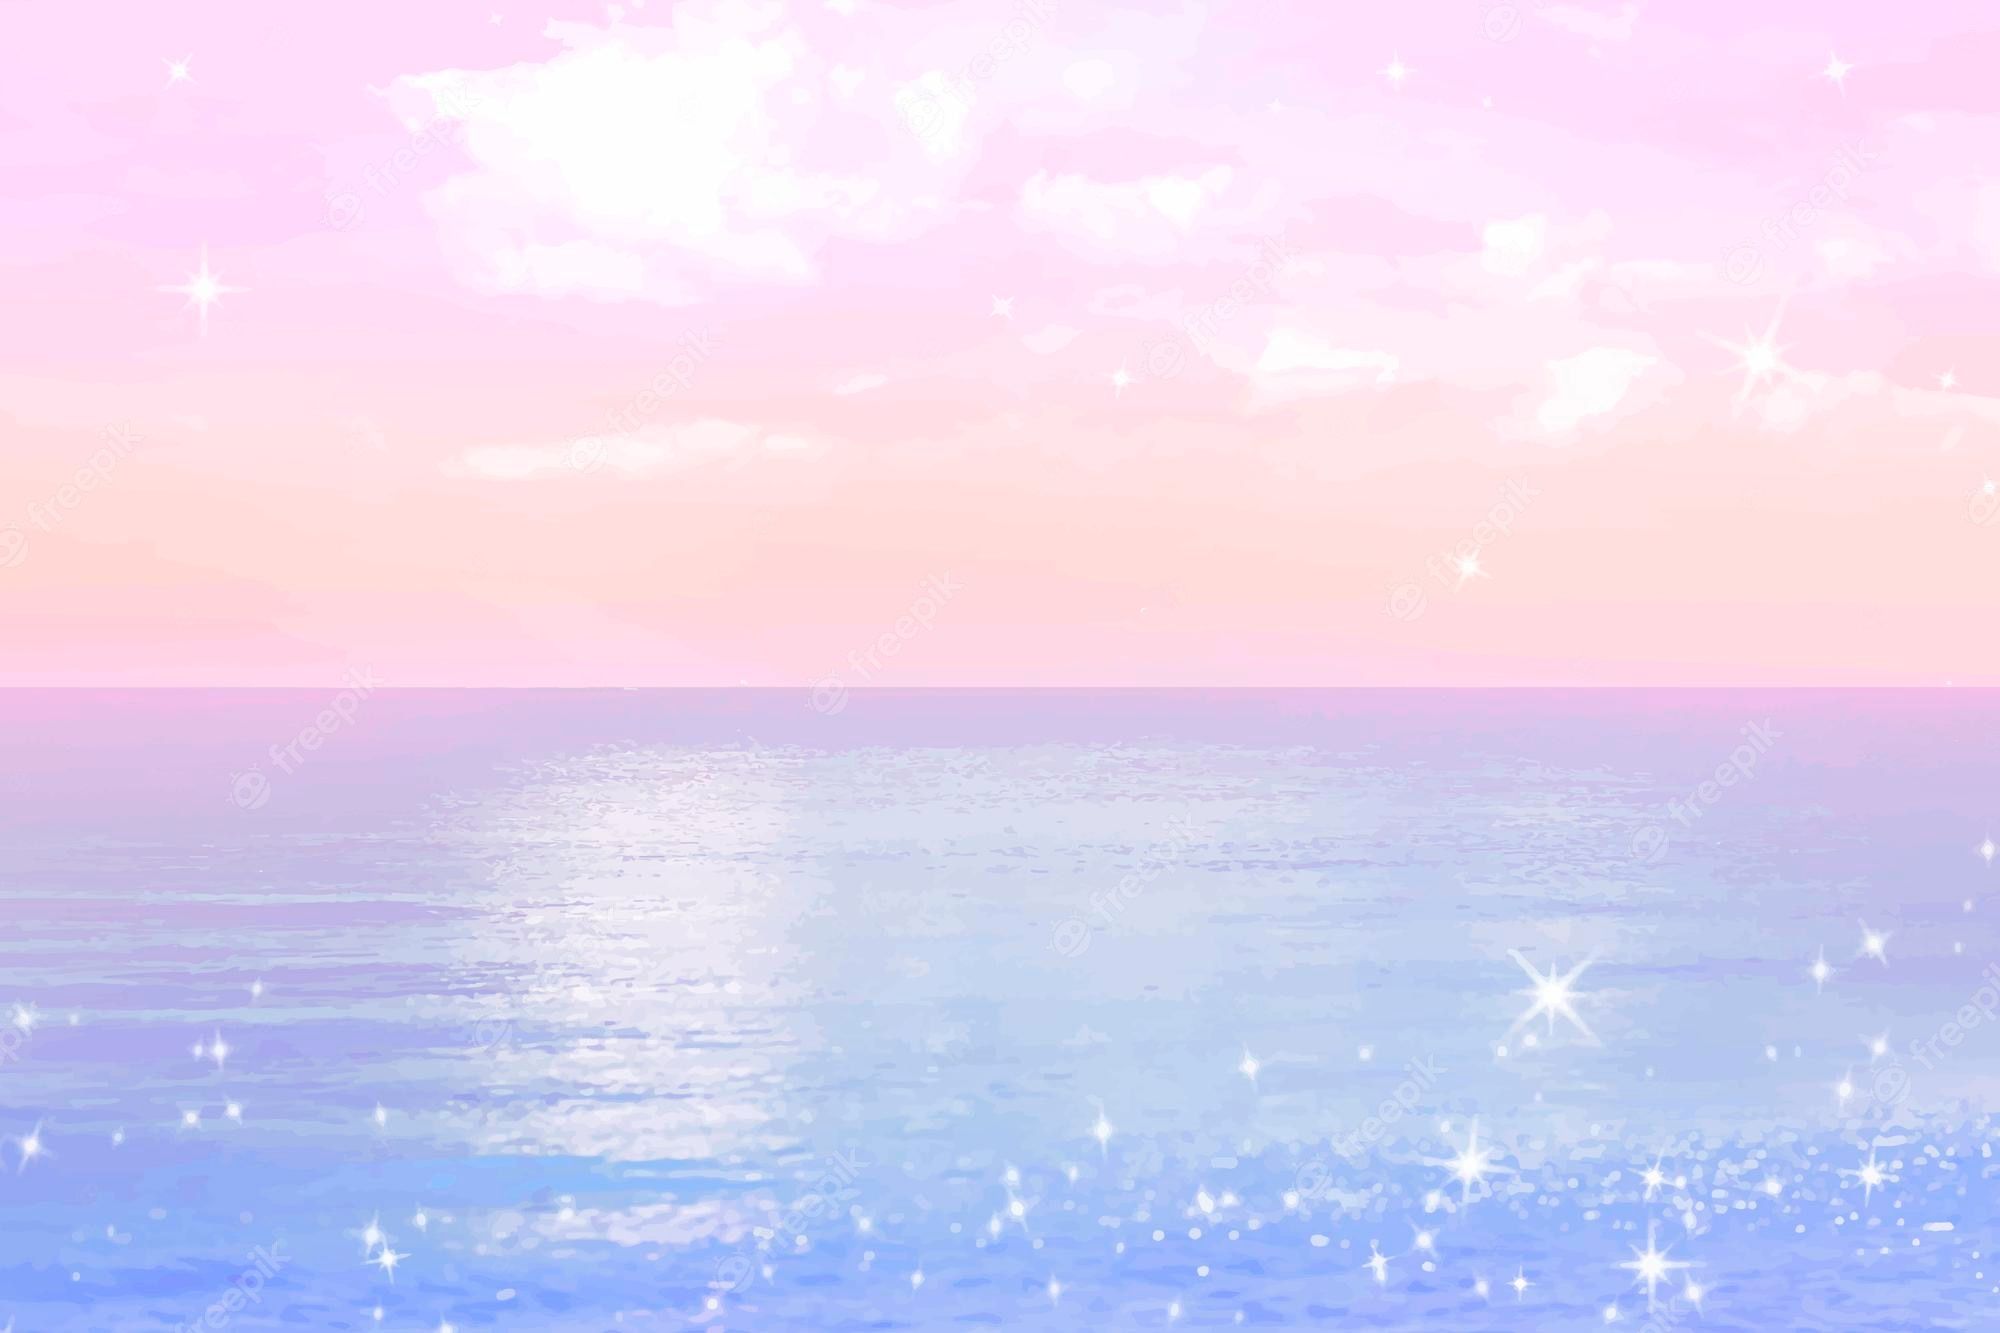  Ozean Hintergrundbild 2000x1333. Free Vector. Aesthetic ocean background, pastel glitter design vector